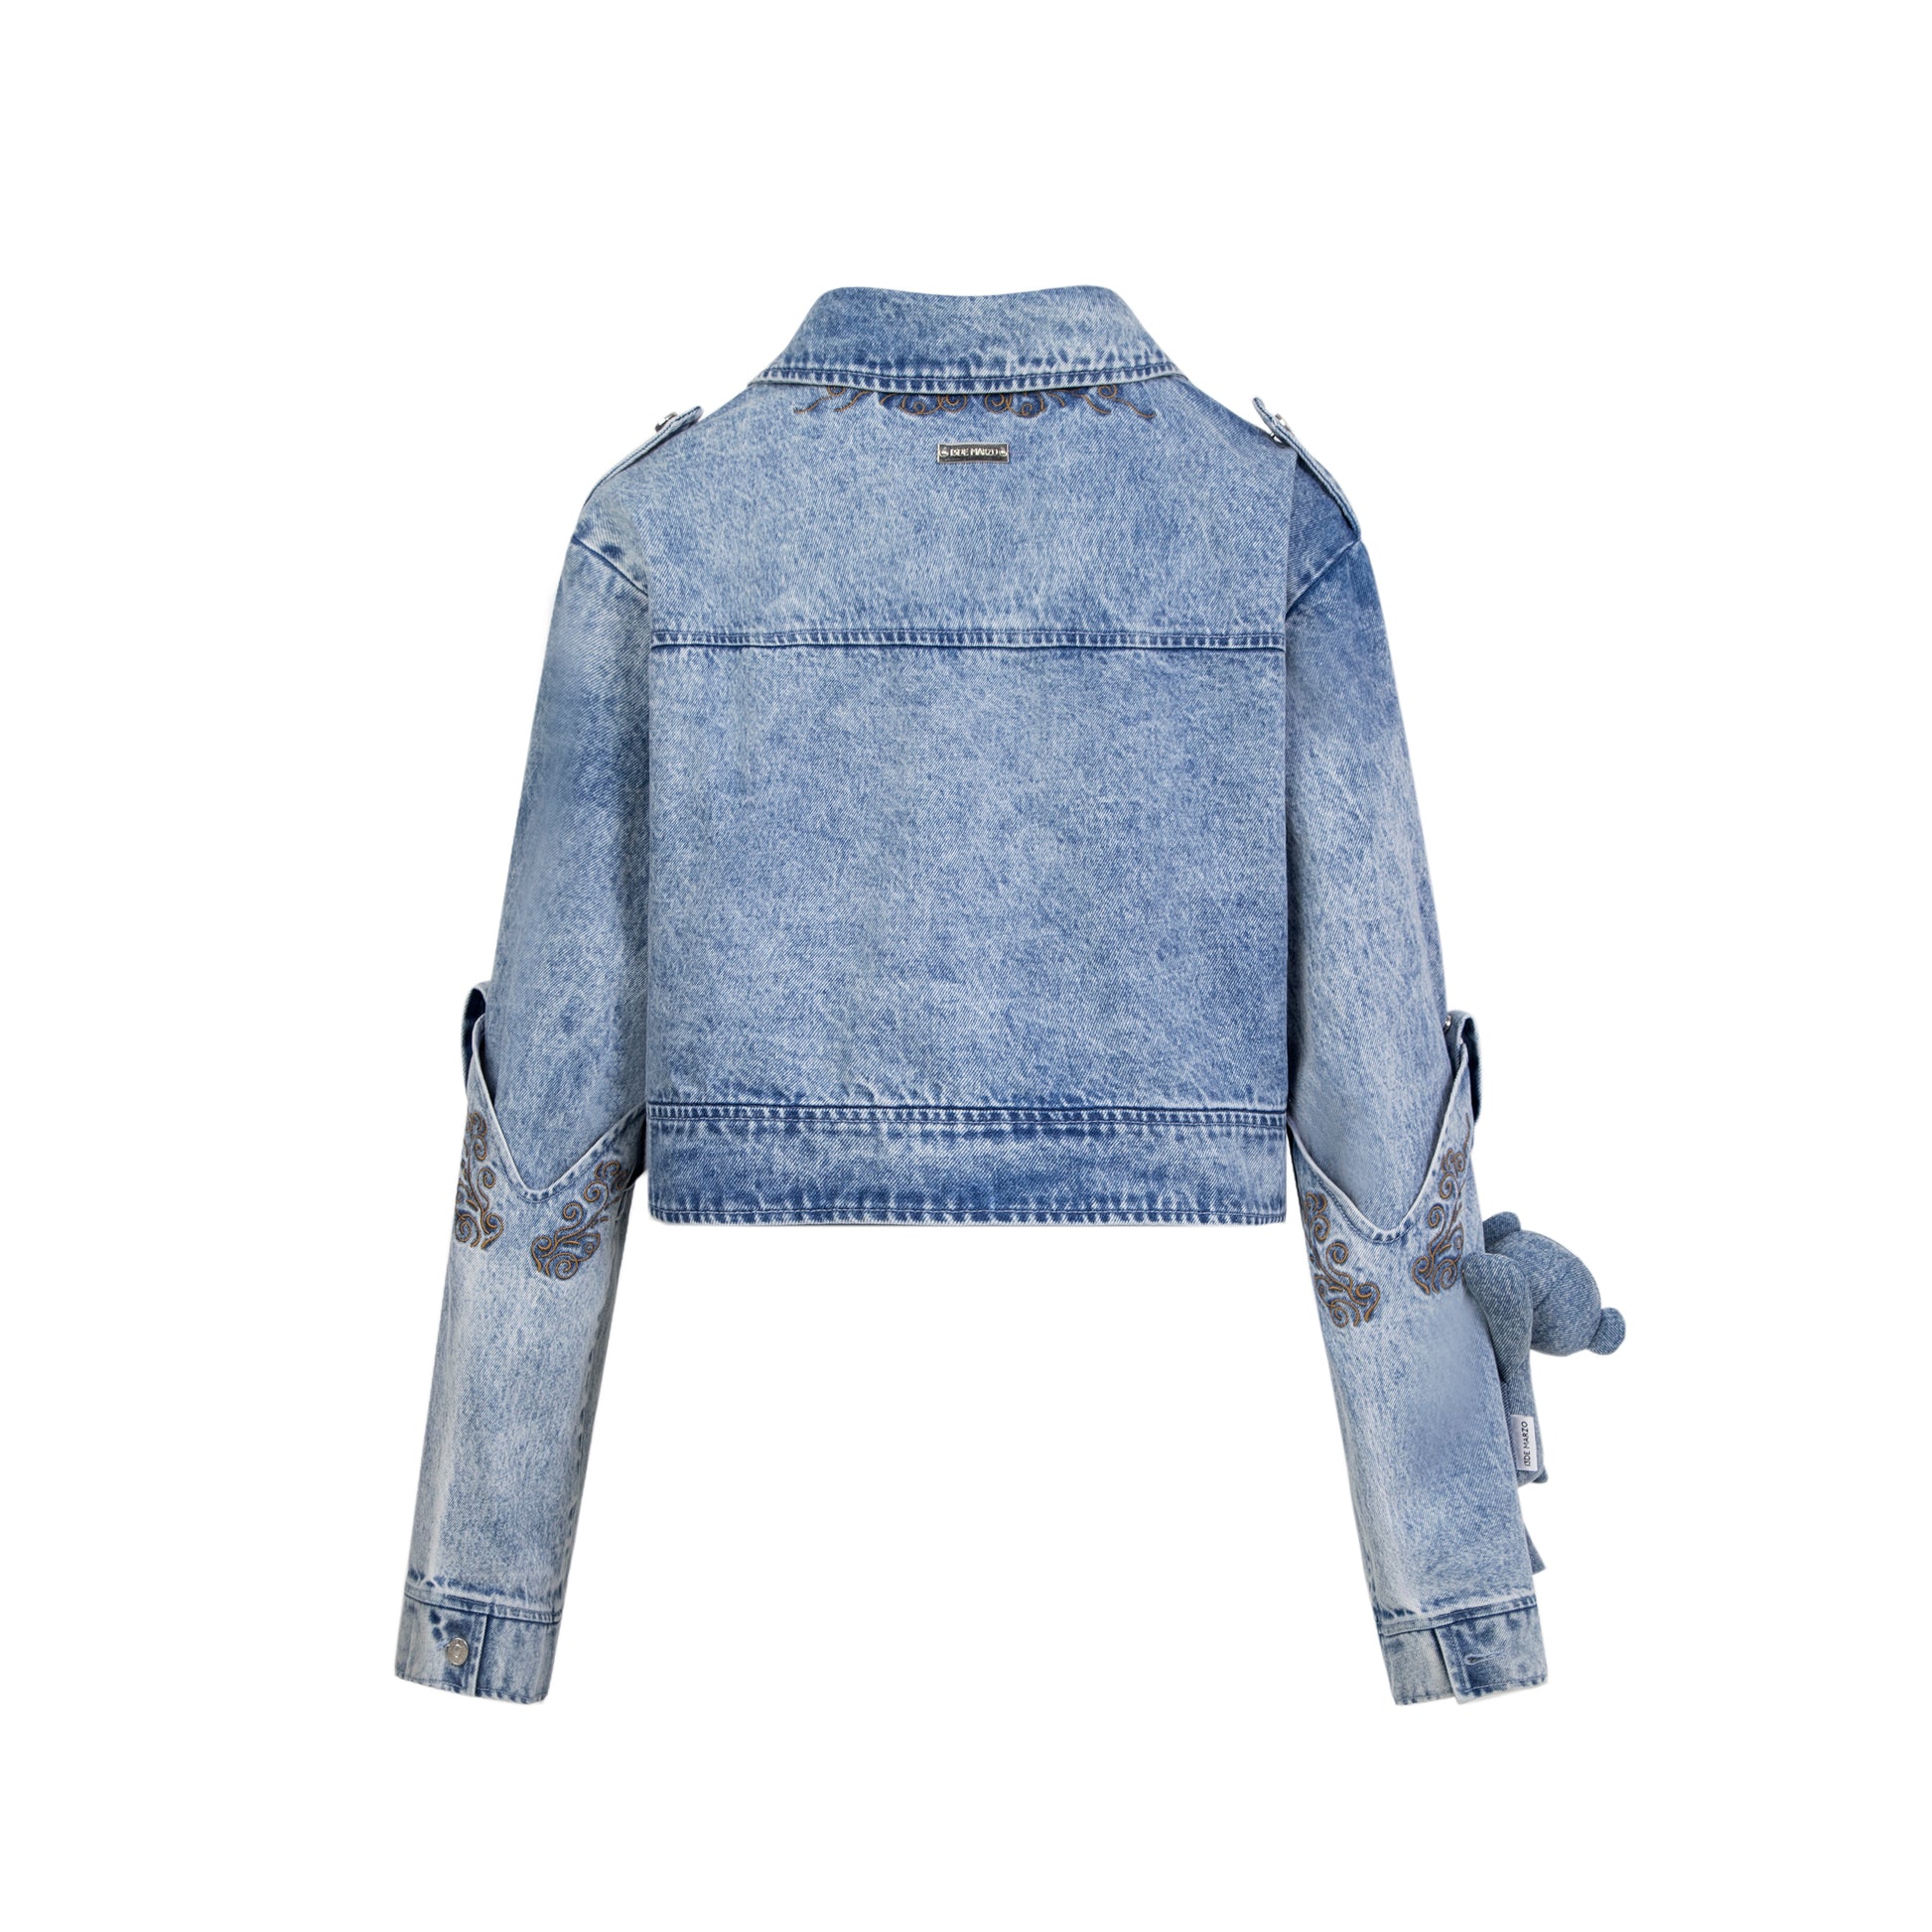 Buy 13De Marzo Palda Bear Zip Sweater Blue Gray Online in Australia